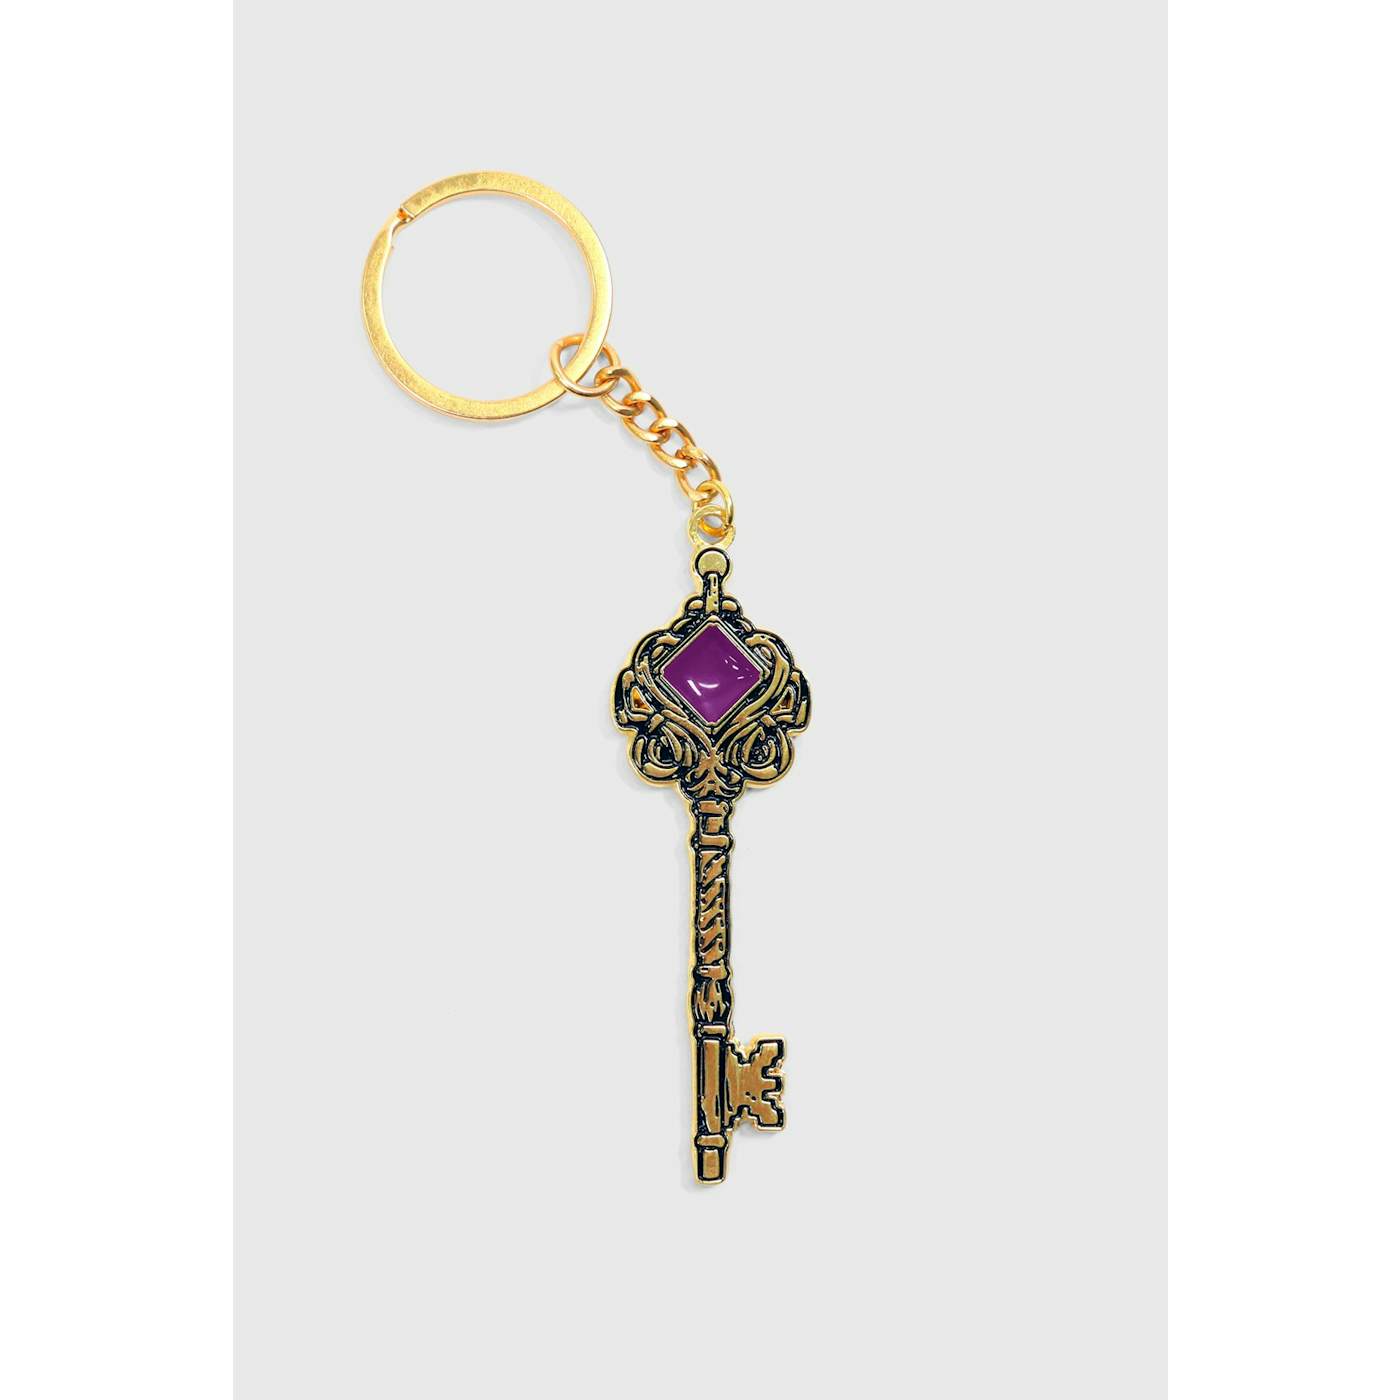 Joey Graceffa The Sorceress' Keychain (Limited Edition)